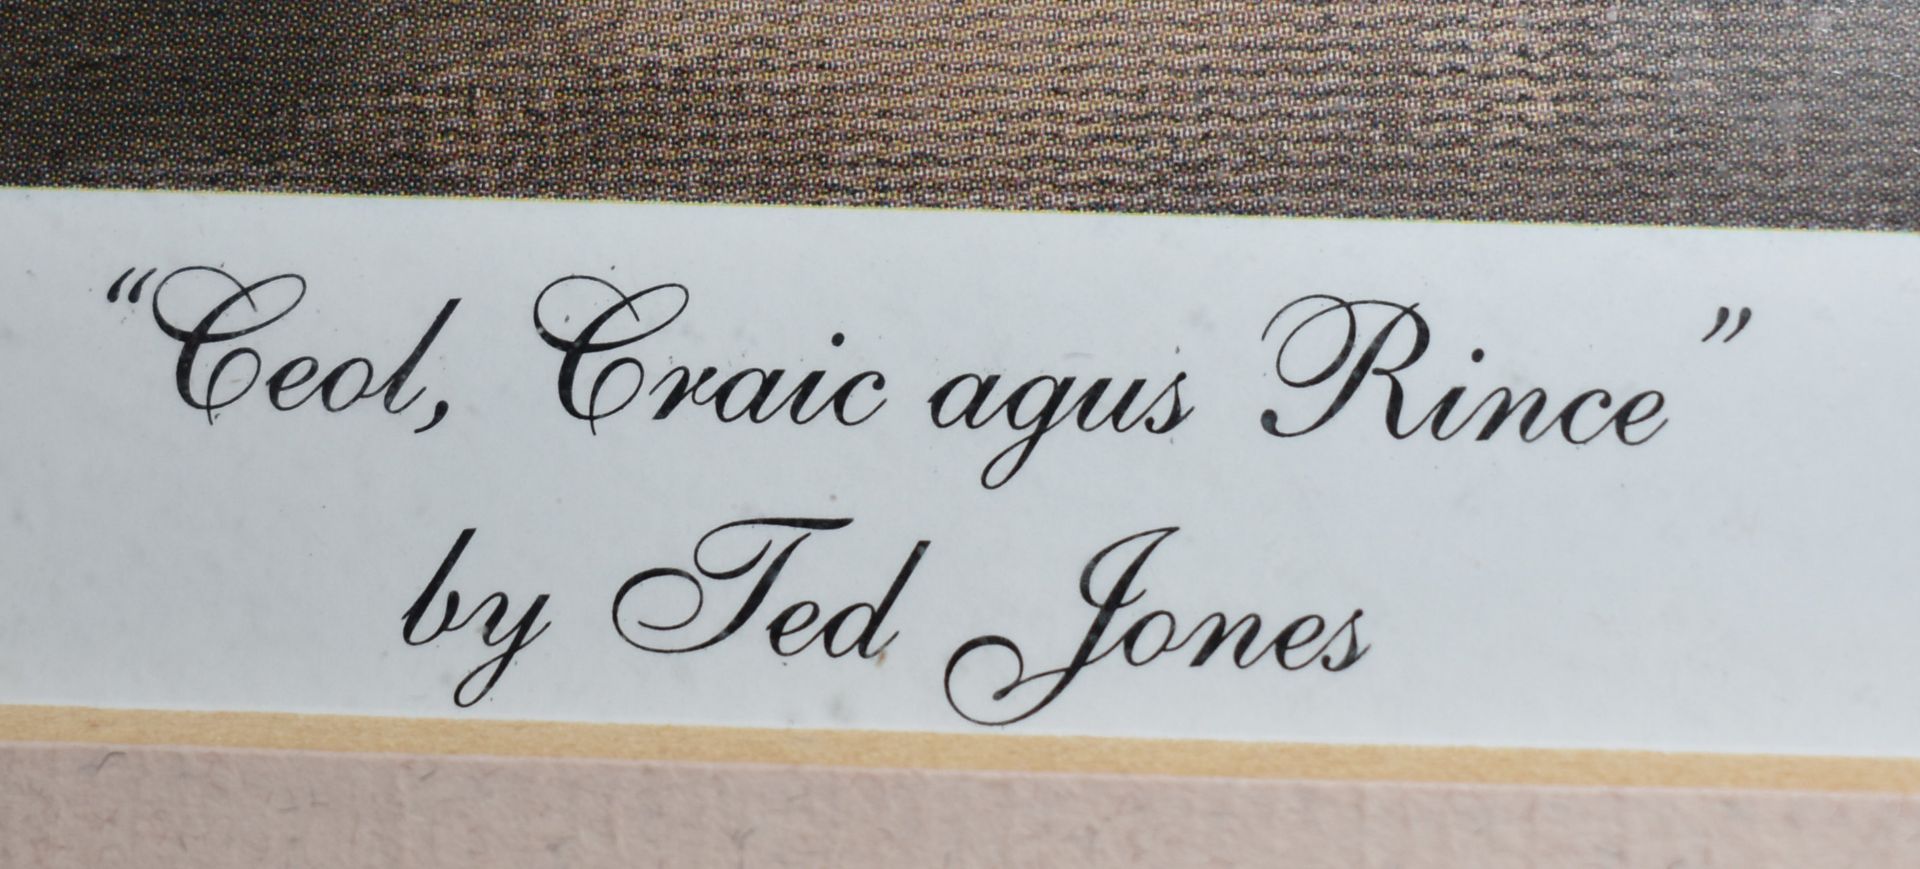 TED JONES (B. 1952) - COEL, CRAIC ANGUS RINCE - 2000 - Image 5 of 8